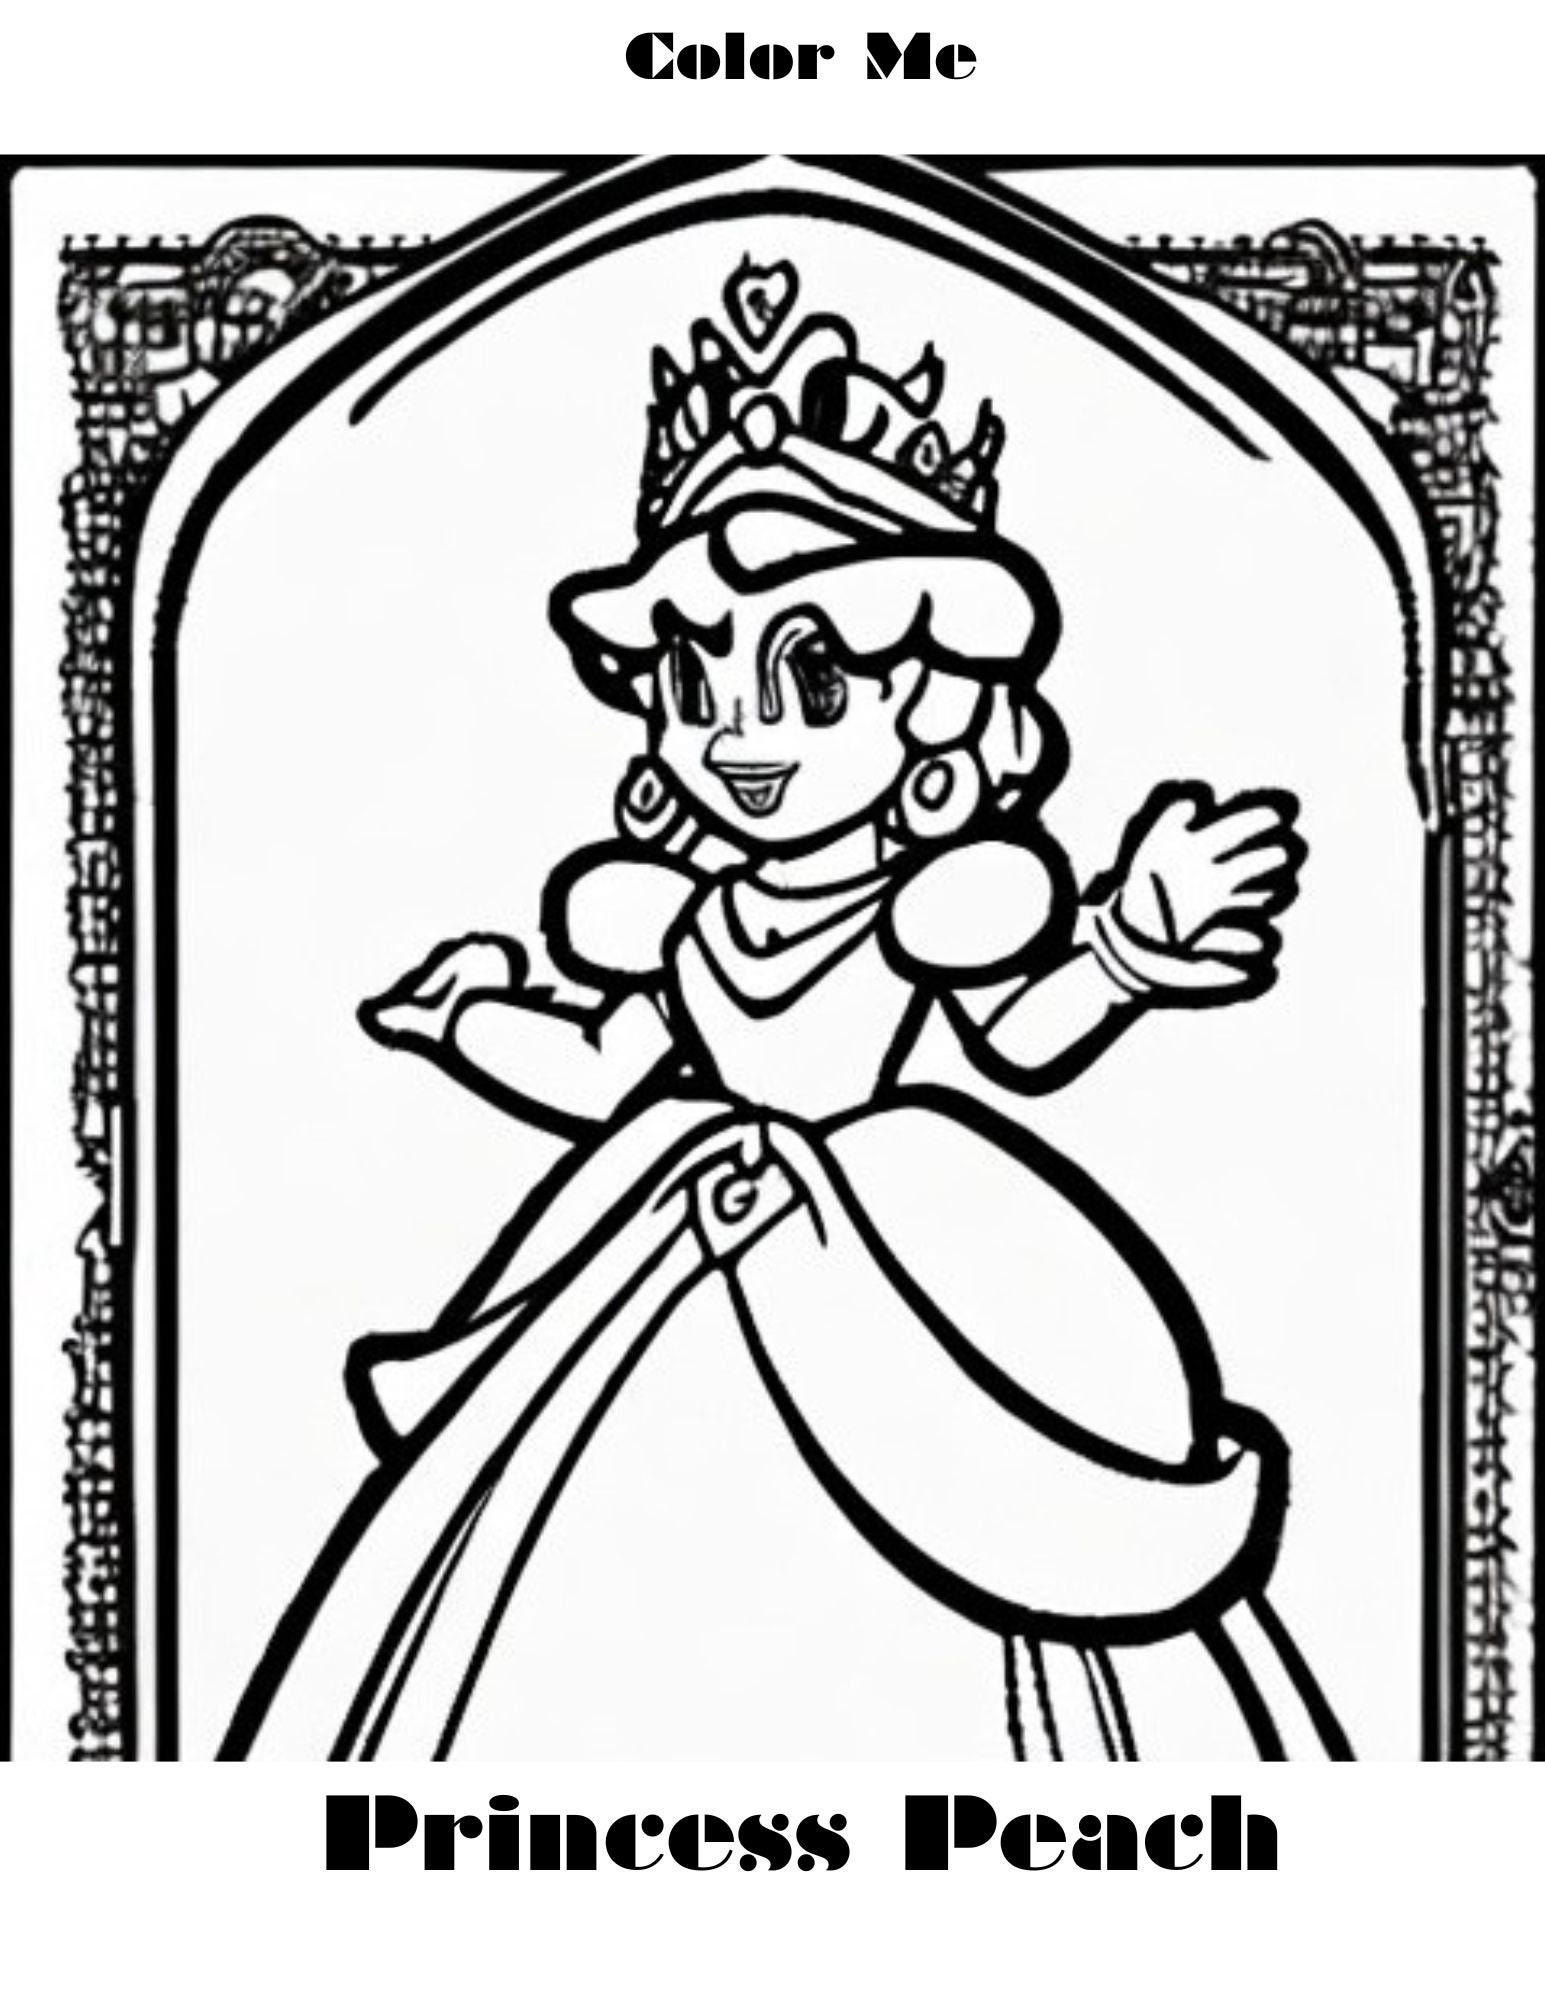 Princess peach coloring page